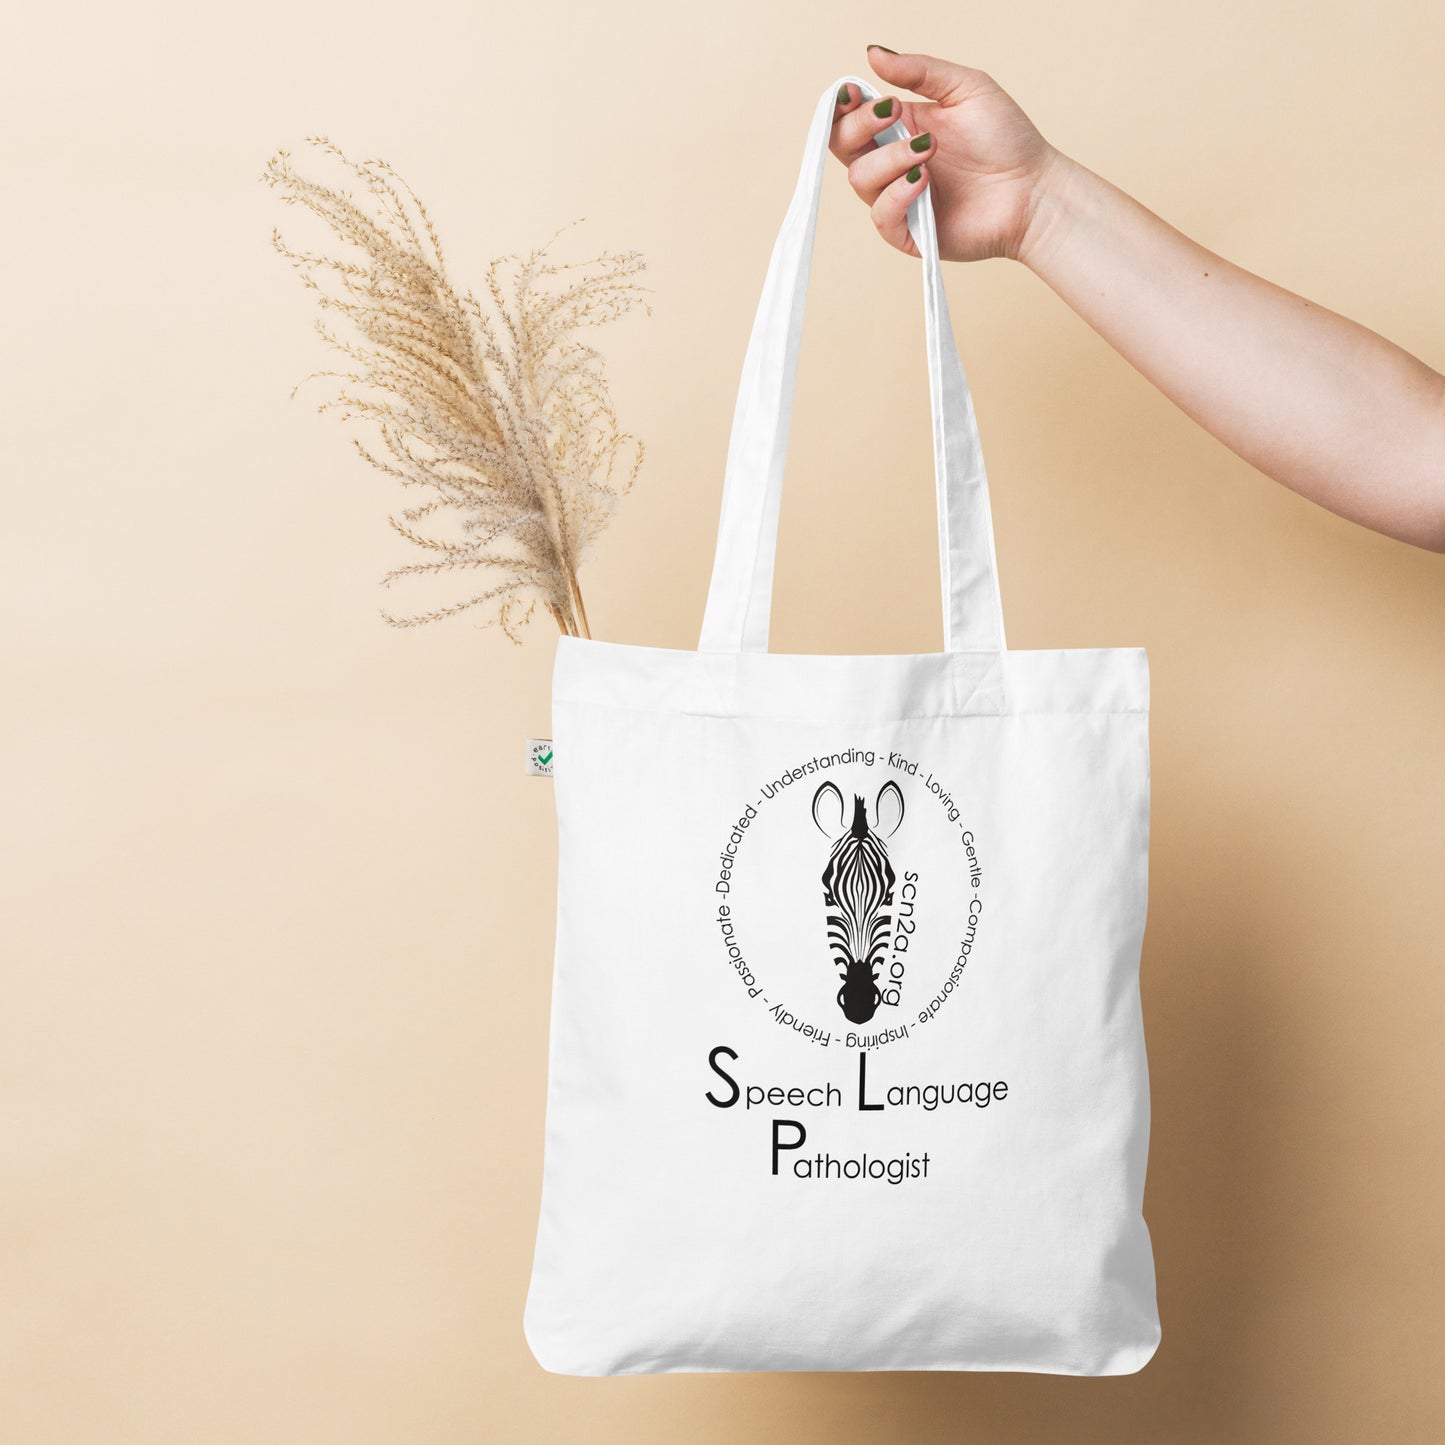 Speech Language Therapist Organic fashion tote bag